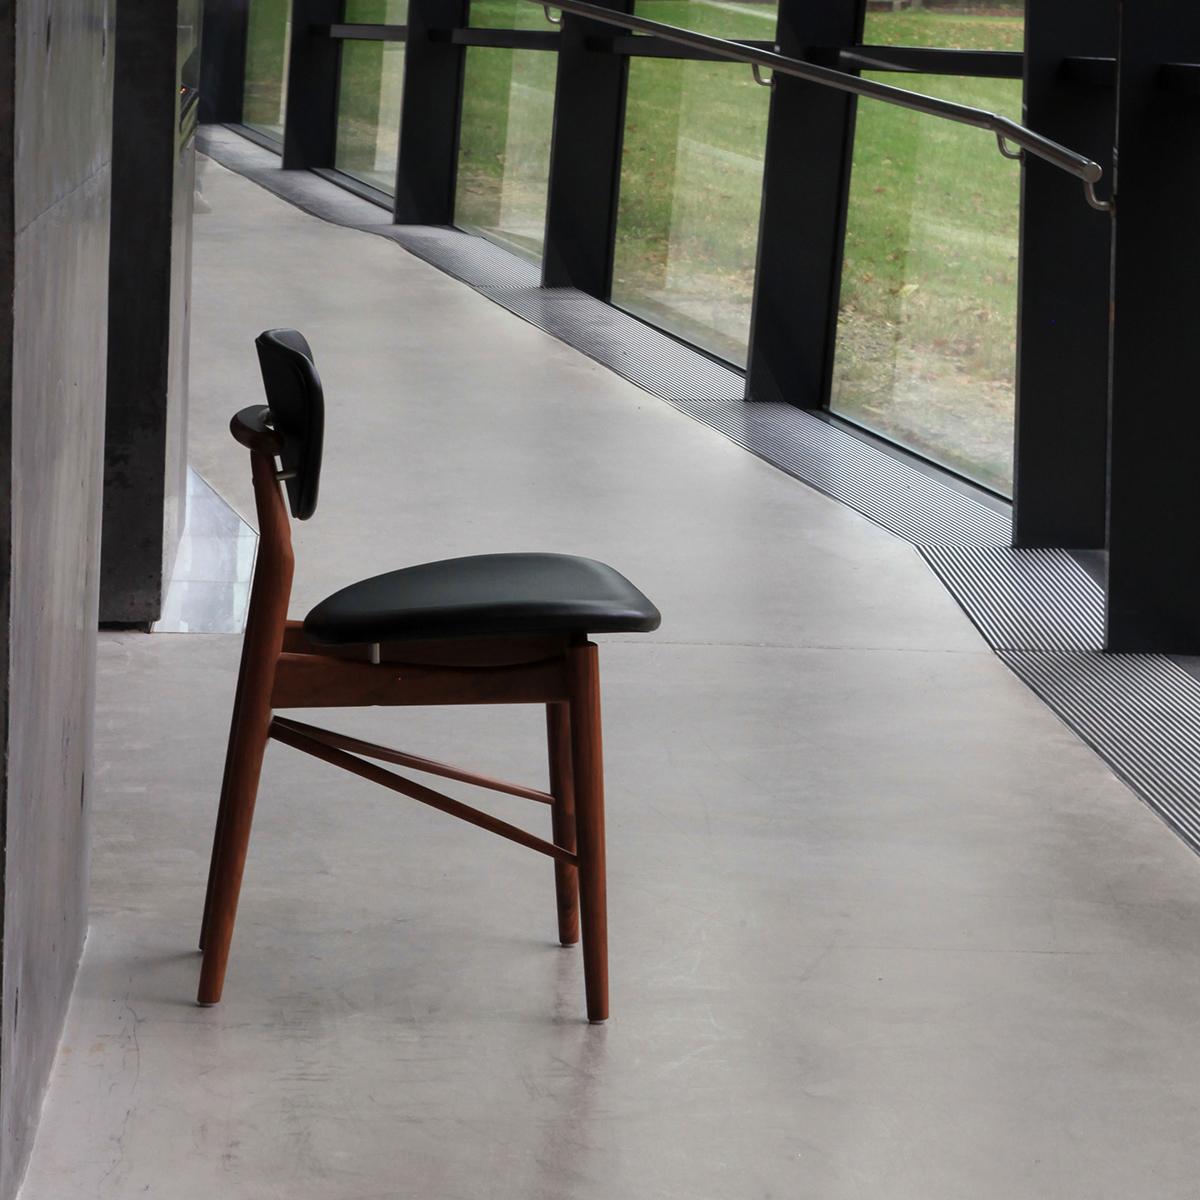 Finn Juhl 108 Chair, Wood and Fabric by House of Finn Juhl 1